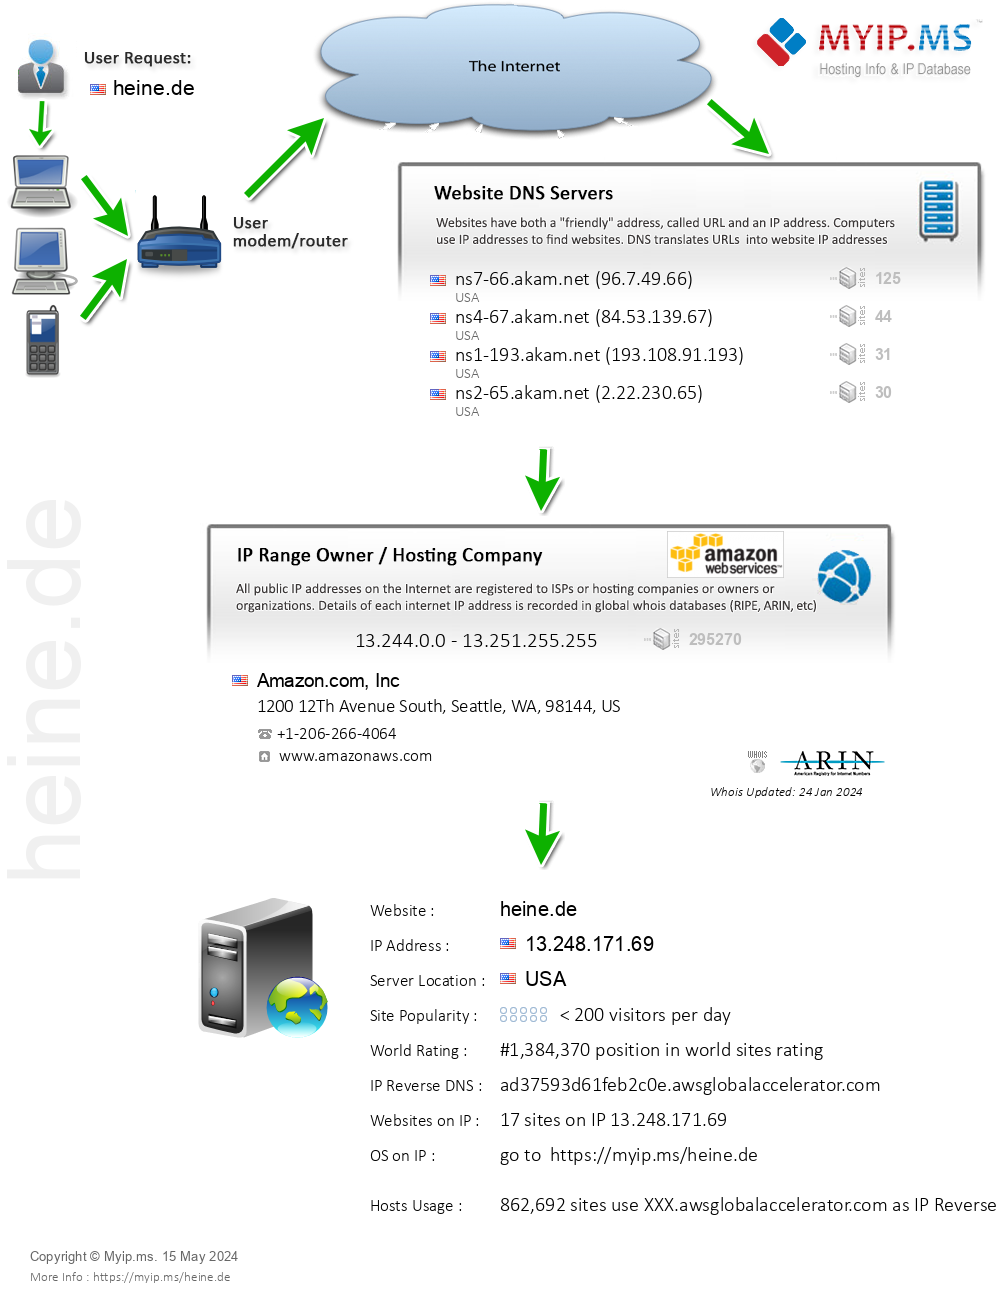 Heine.de - Website Hosting Visual IP Diagram